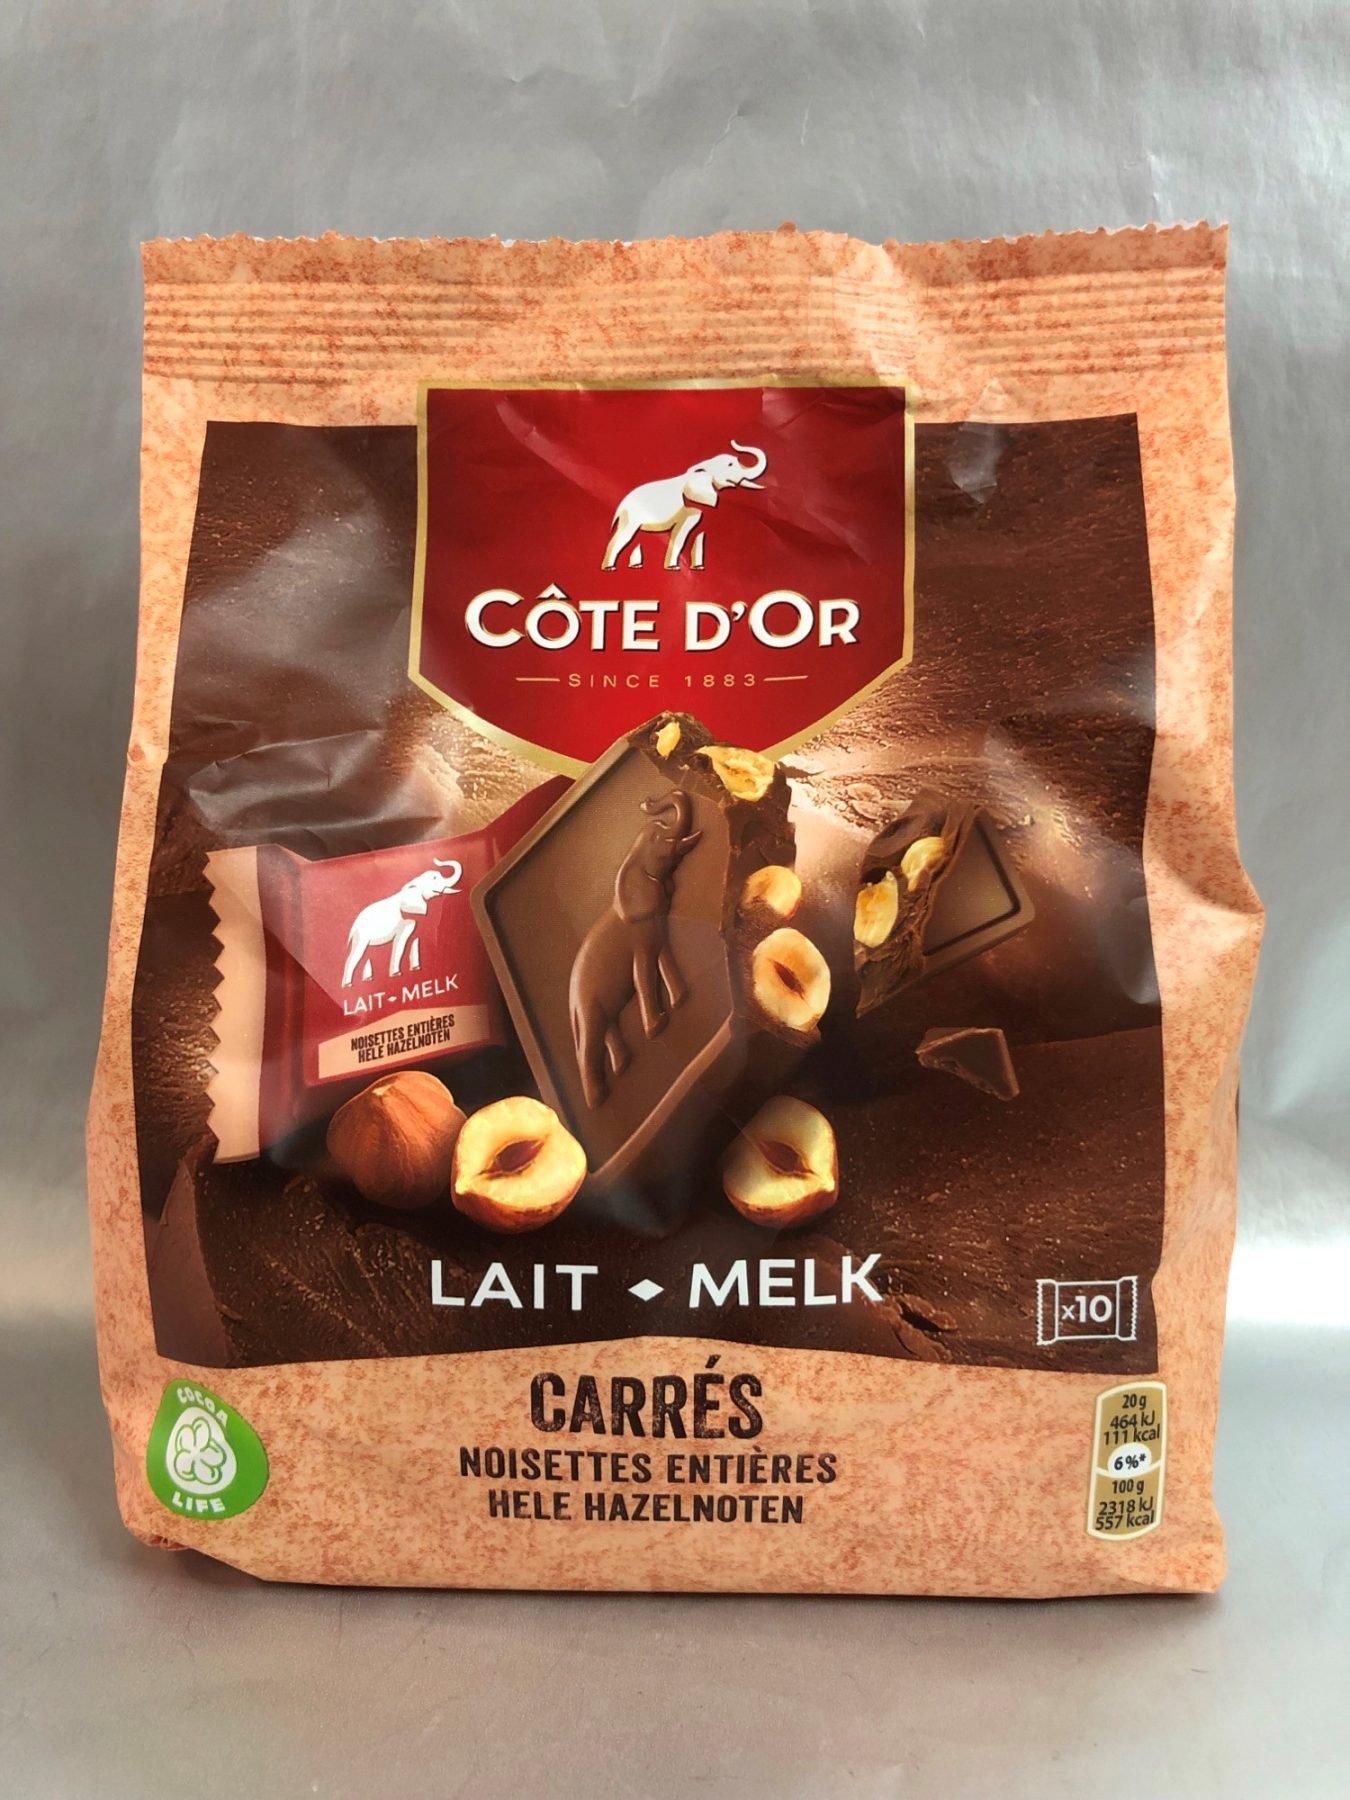 Cote D'Or 'carres' milk chocolate